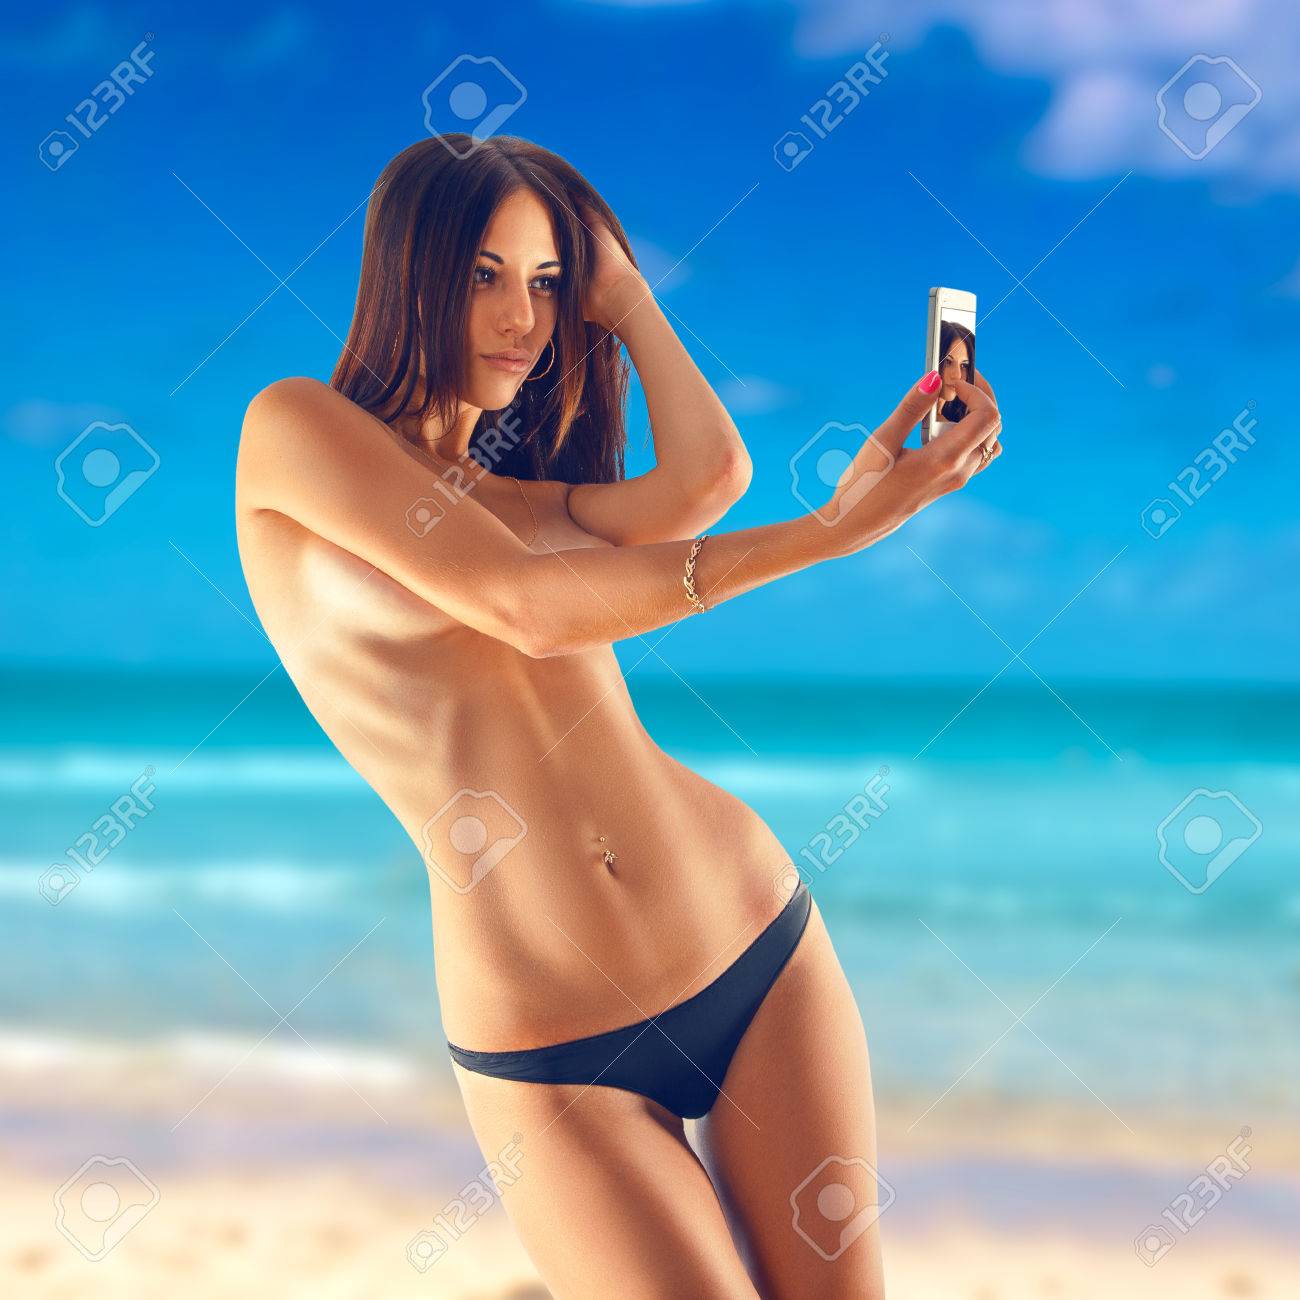 Best of Naughty nude beach